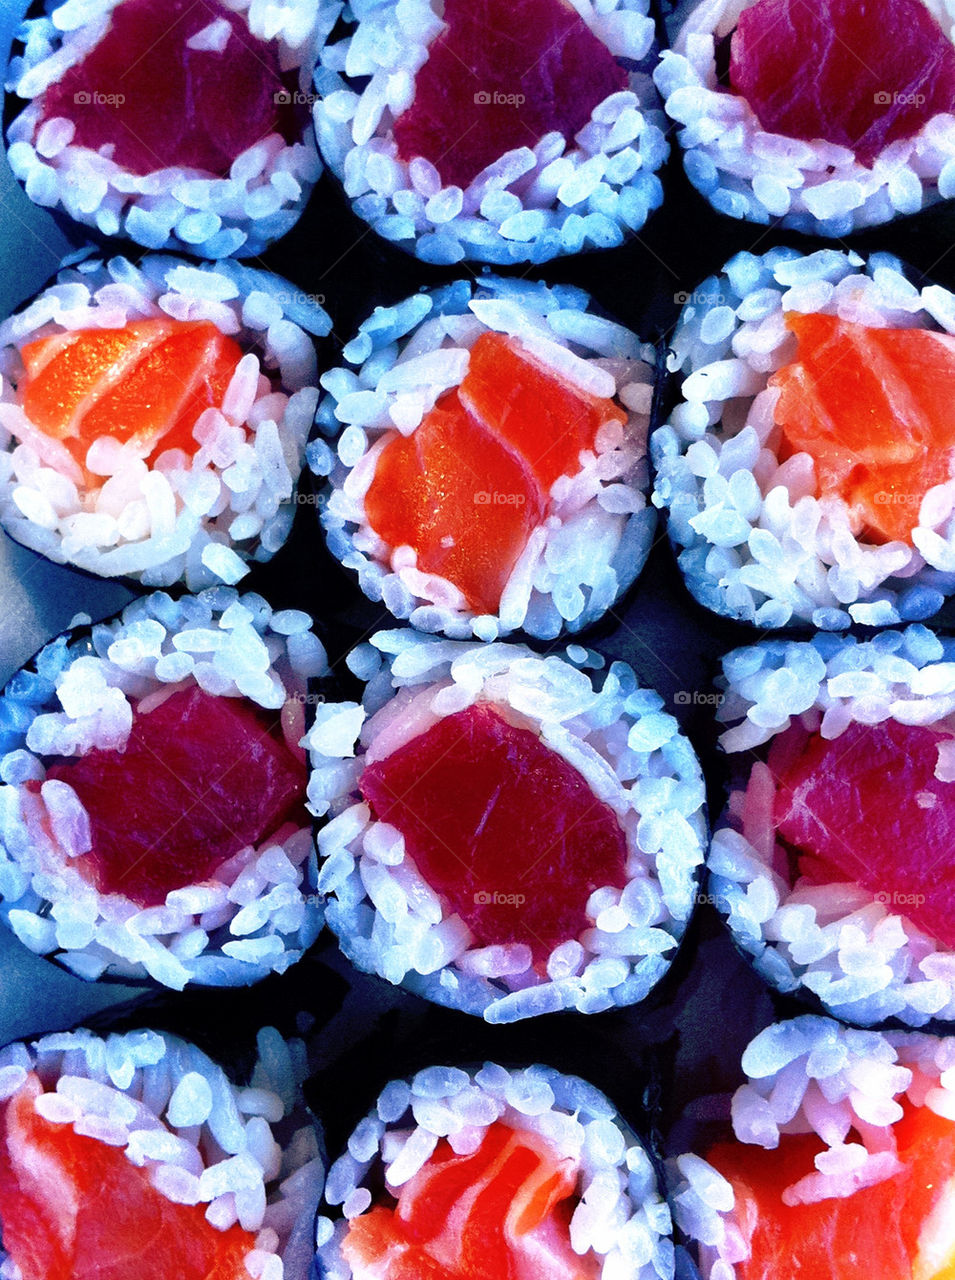 food sushi fish rice by bsa